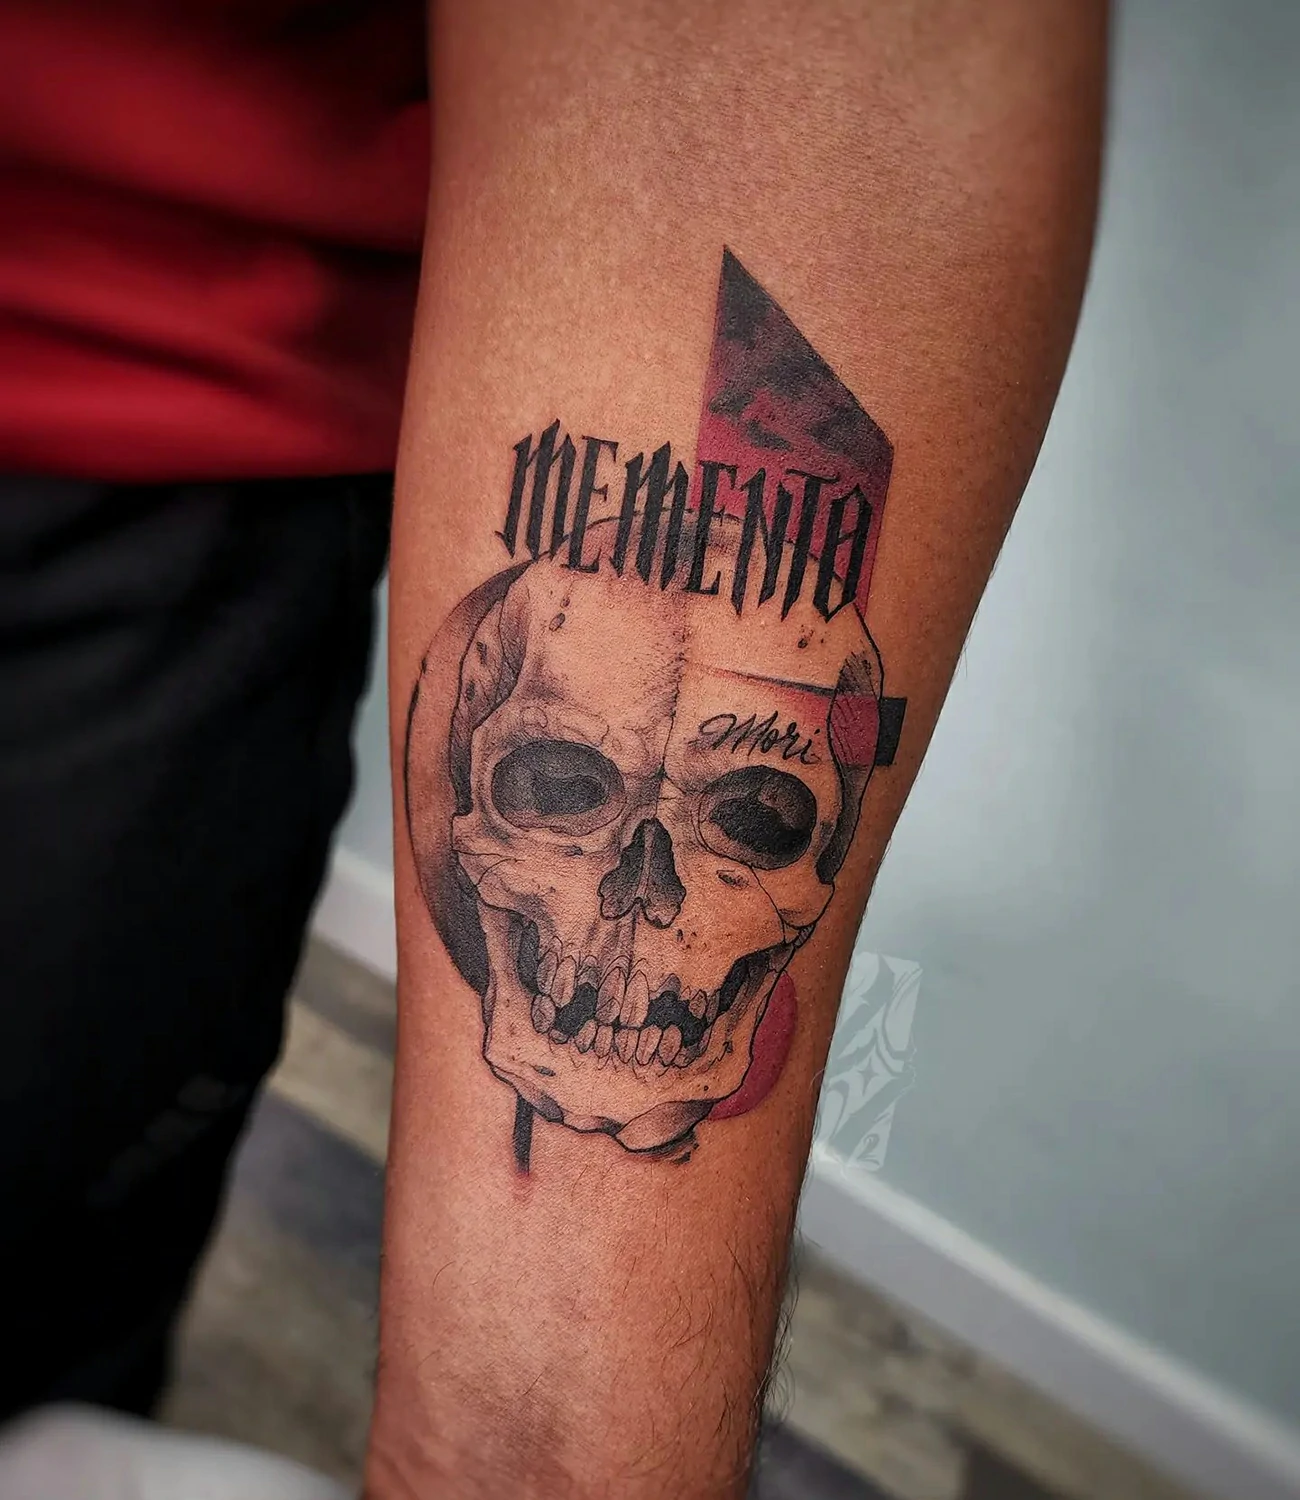 memento mori skull tattoo: A tattoo featuring a skull along with the phrase "memento mori," emphasizing the motif of mortality.